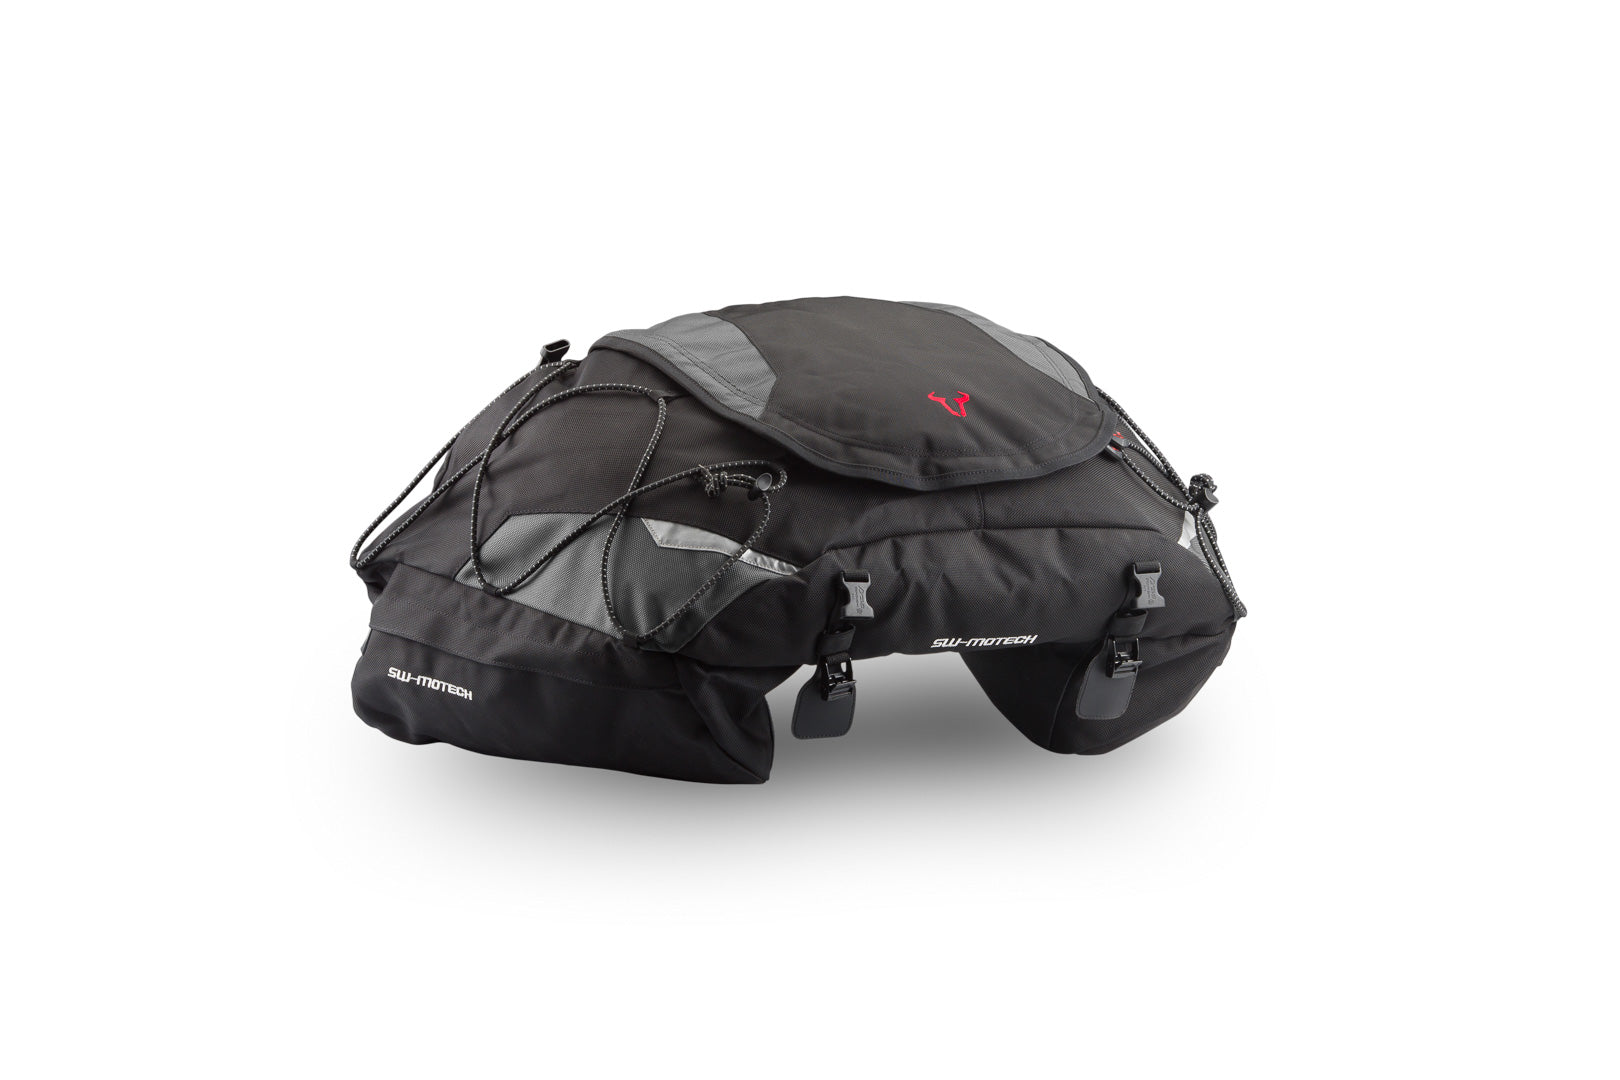 EVO Cargobag Tail Bag 50 litre Ballistic Nylon Black/Grey